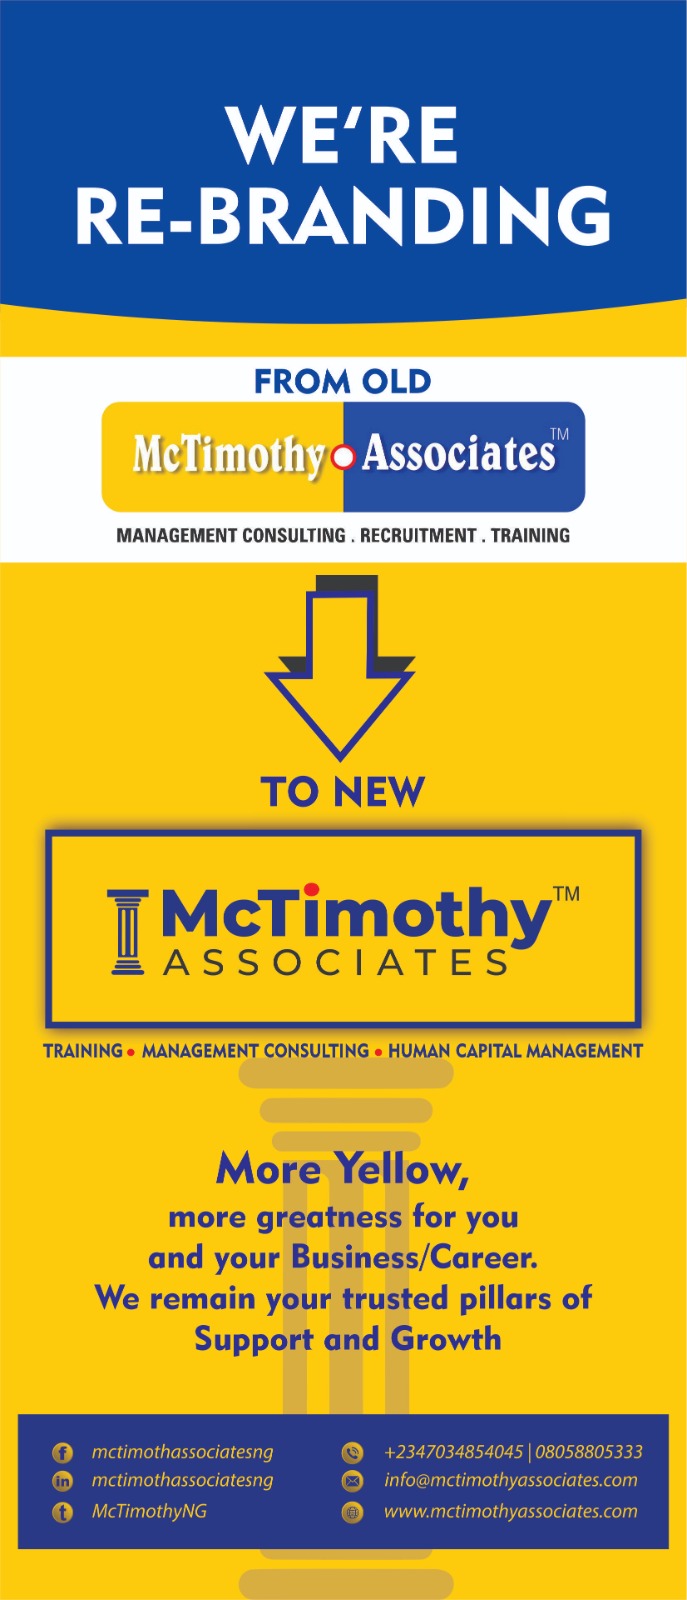 McTimothy Associates